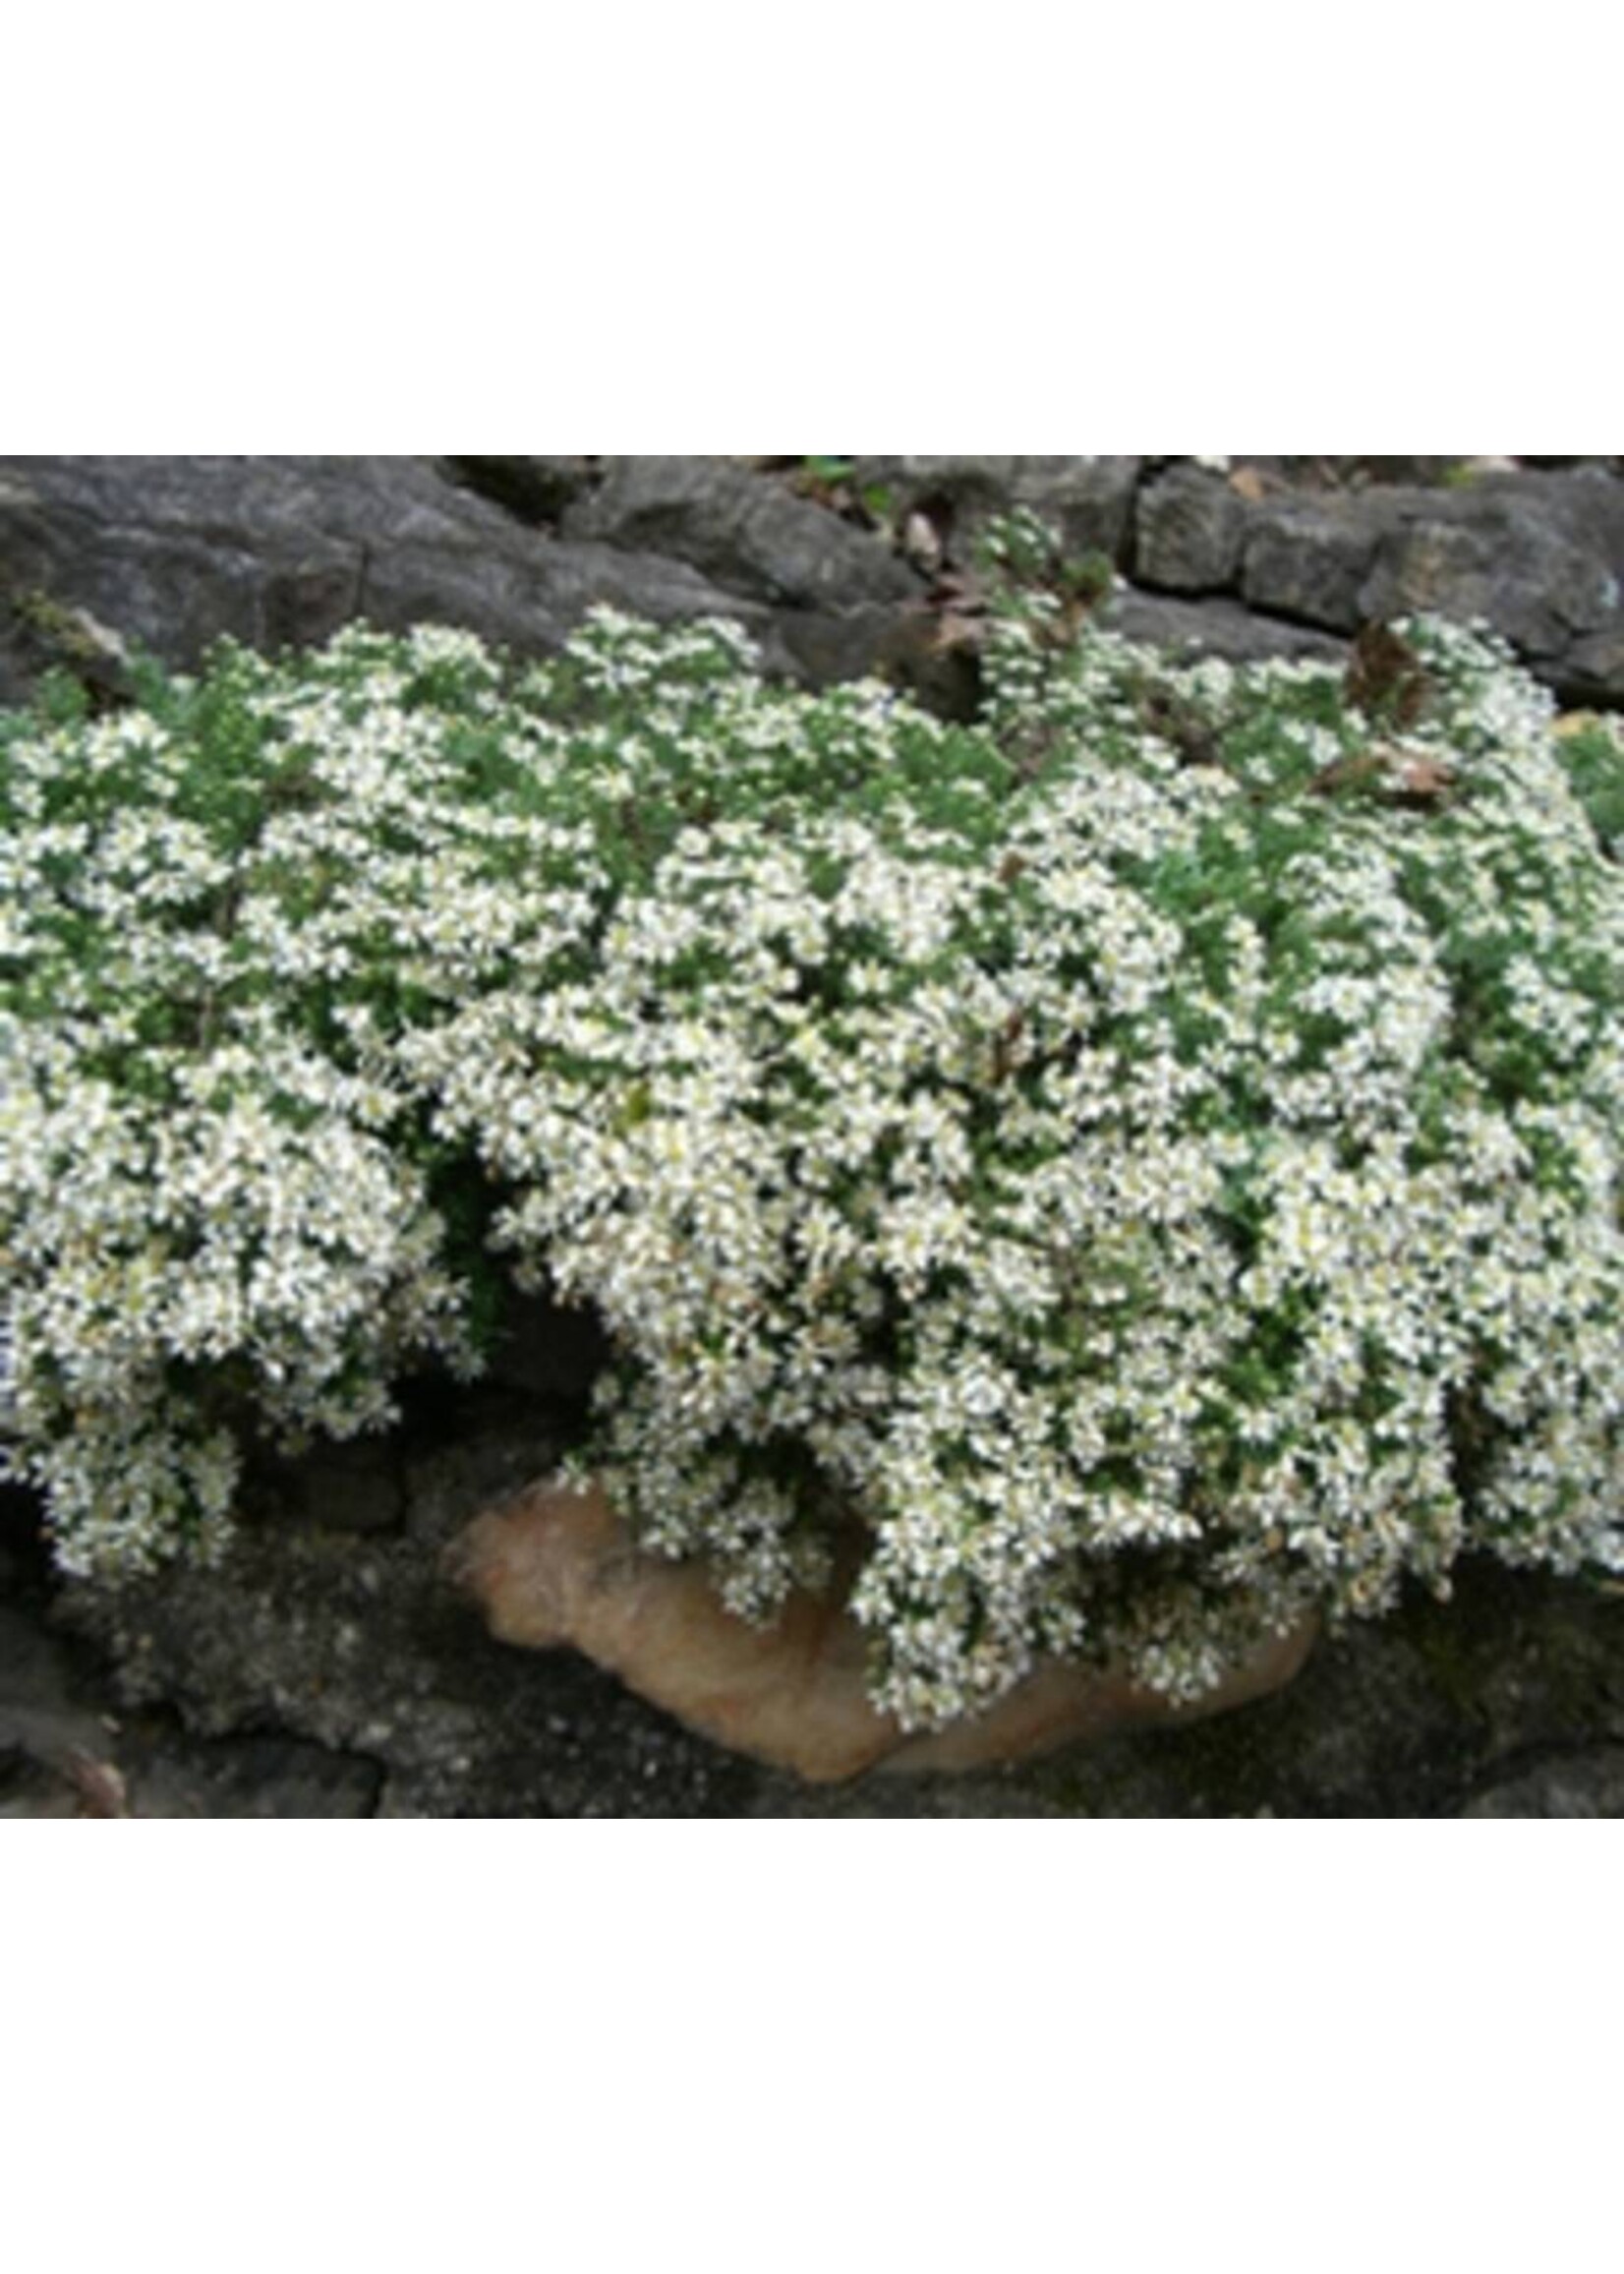 Symphotricum (Aster) ericoides Aster - Heath, Snow Flurry, #1